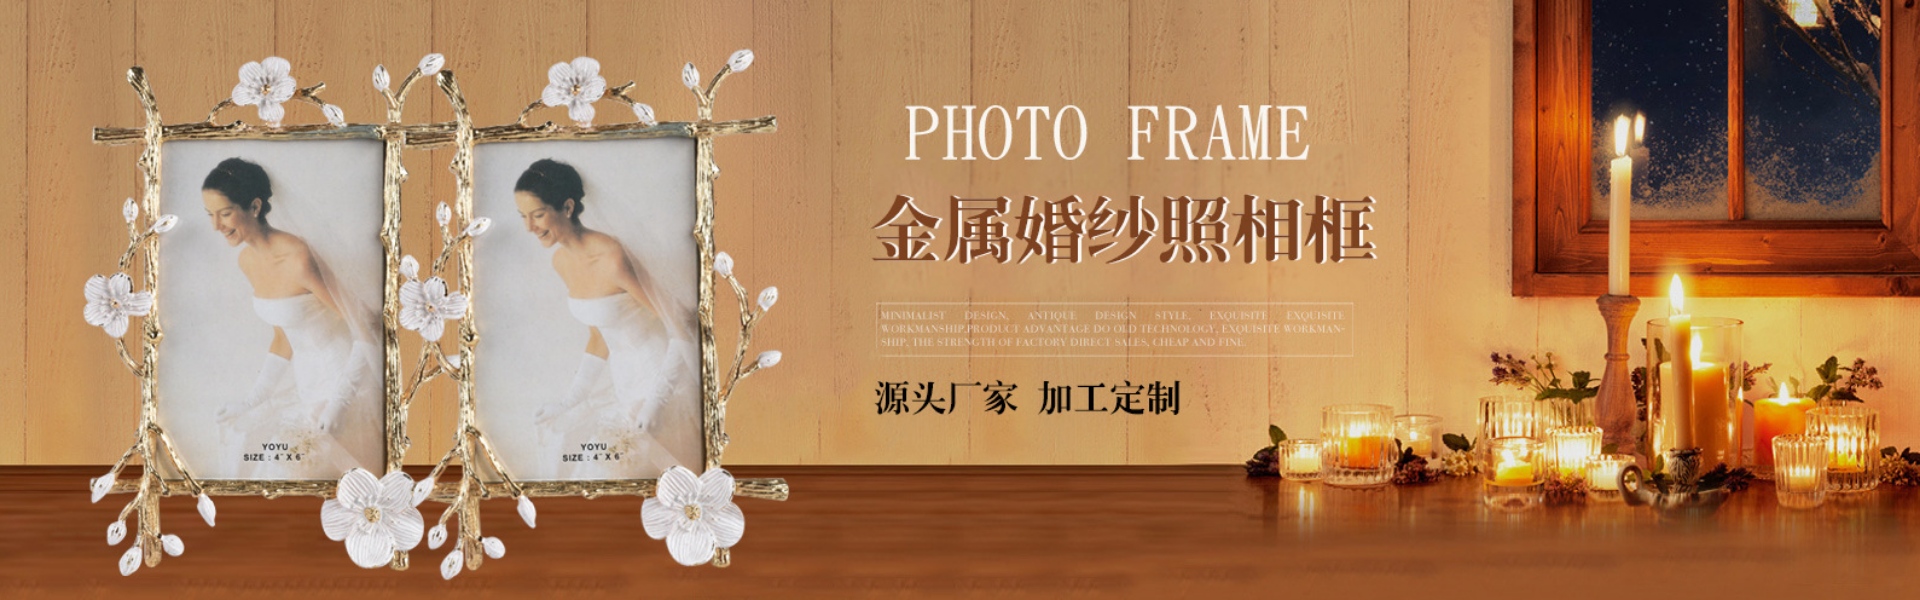 Obras de arte, regalos y enseres domésticos,Dongguan xinzhirun Crafts Co., Ltd